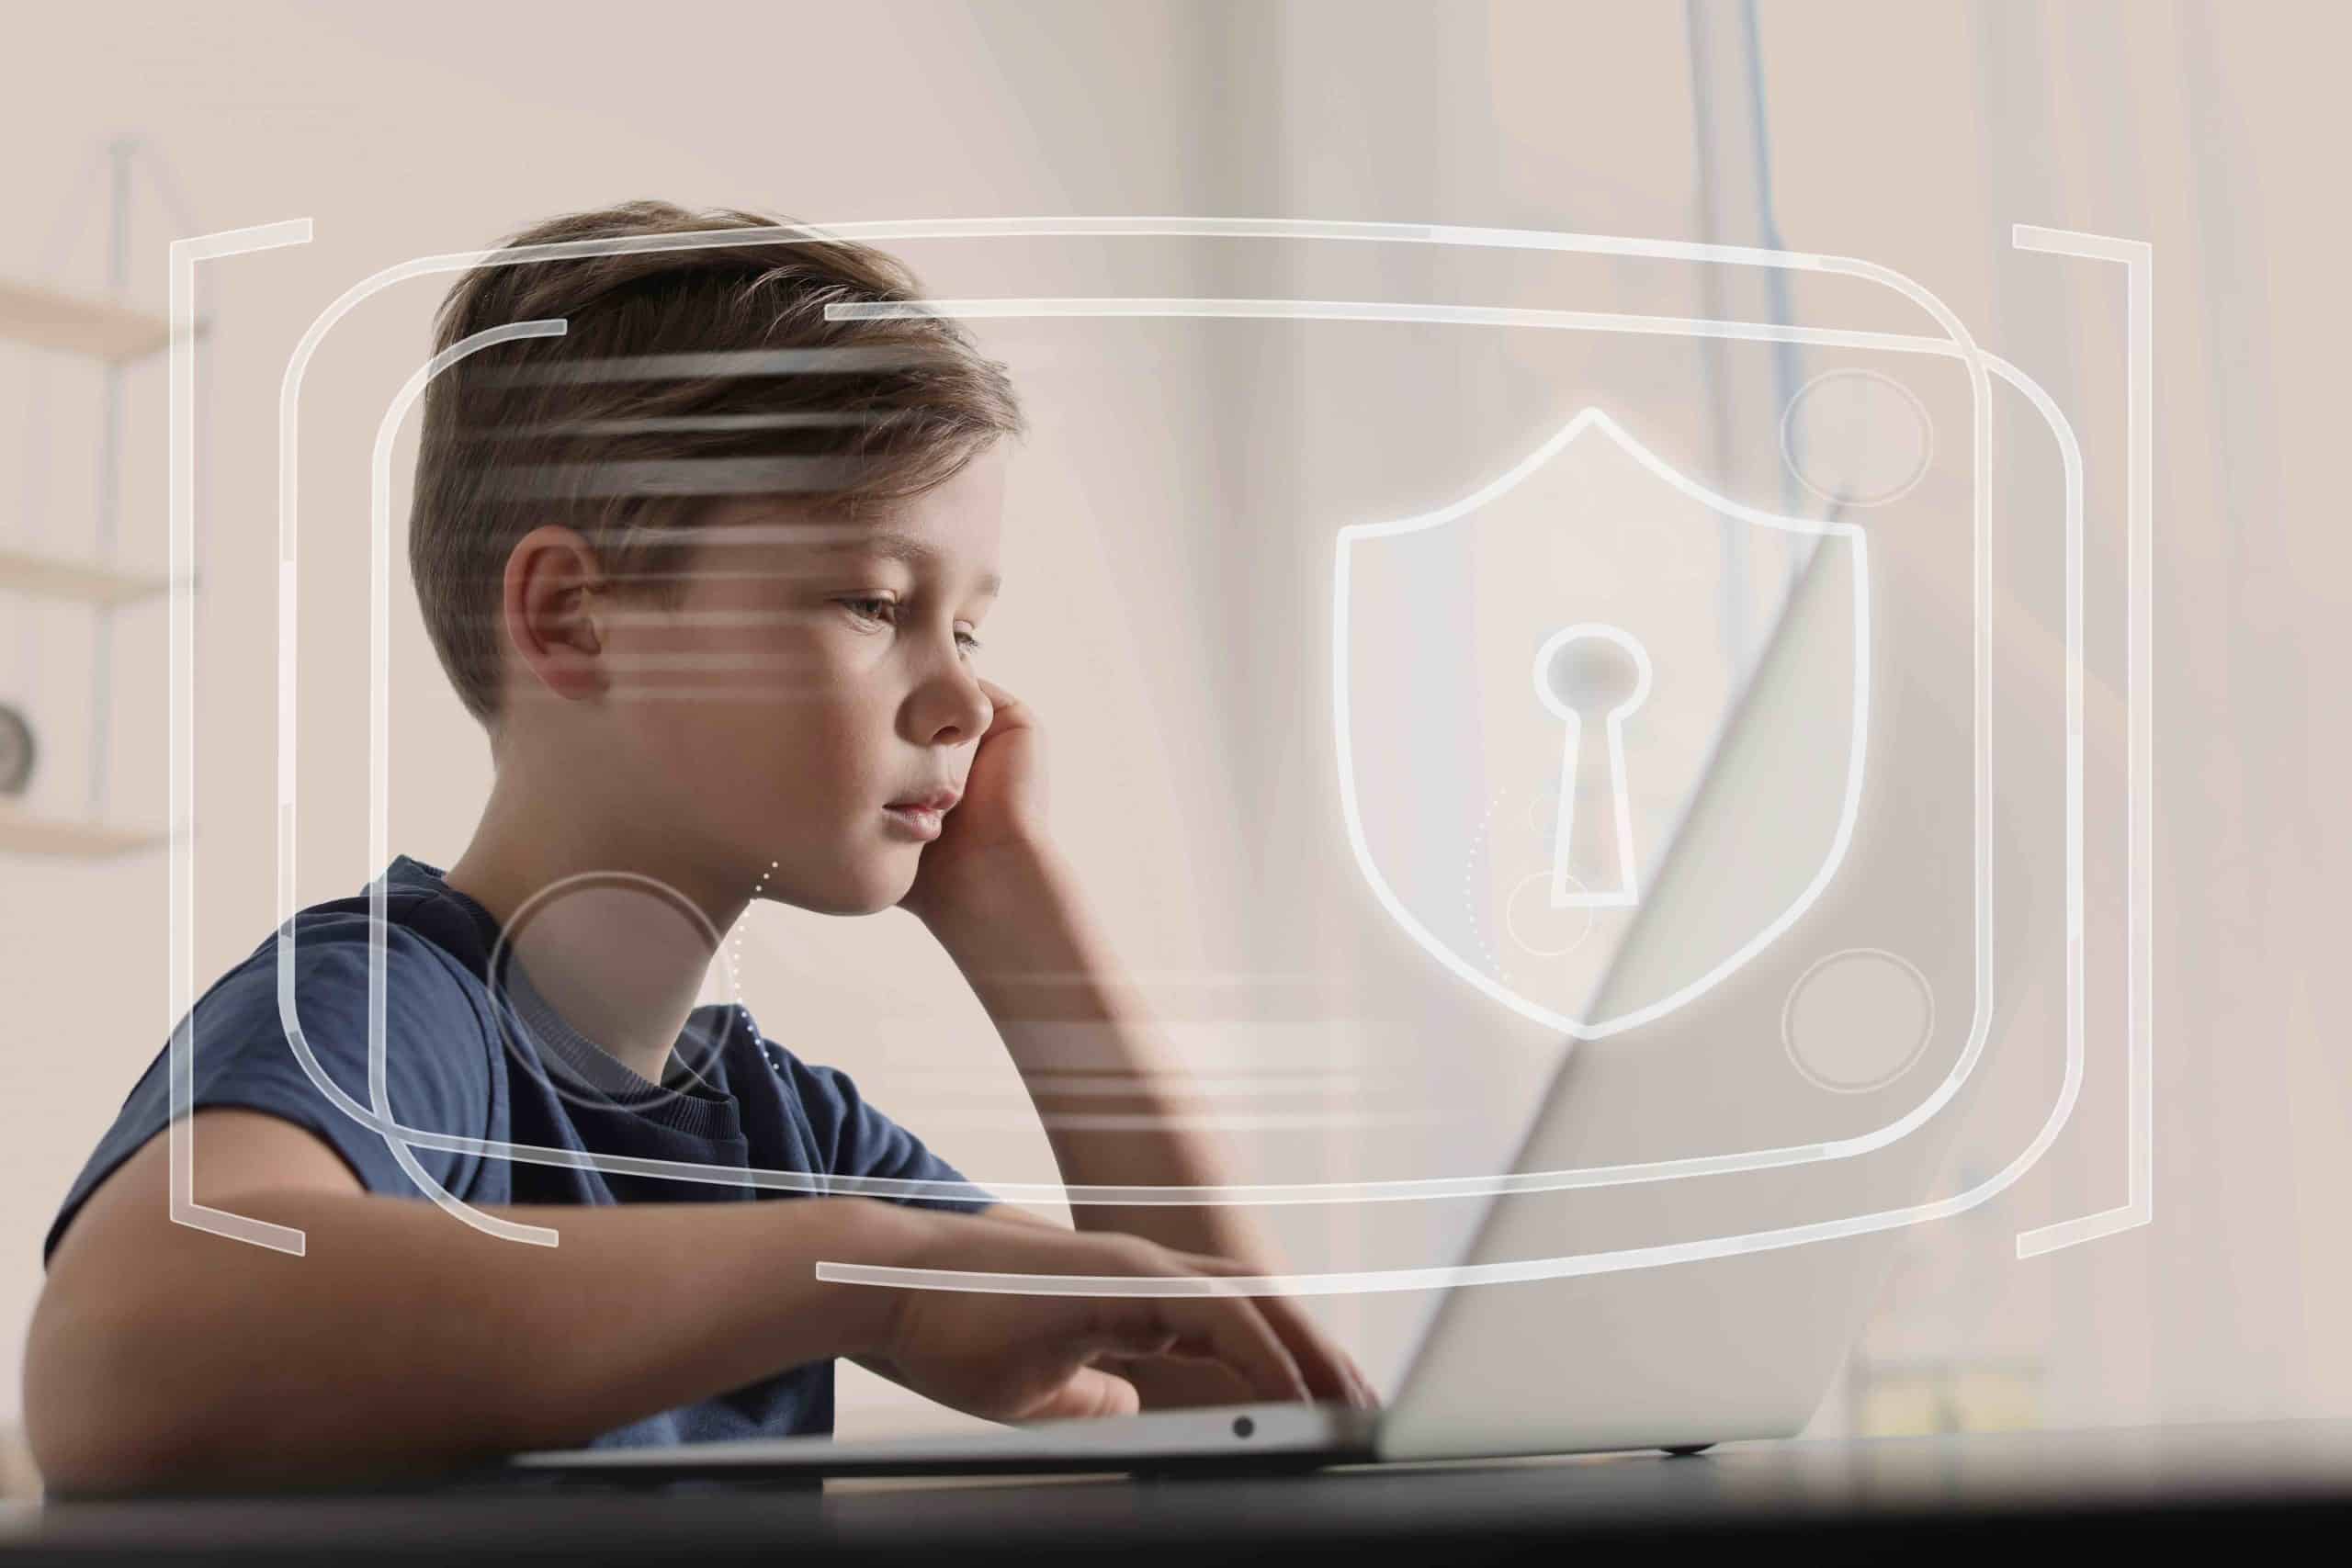 Child,Safety,Online.,Little,Boy,Using,Laptop,At,Home.,Illustration